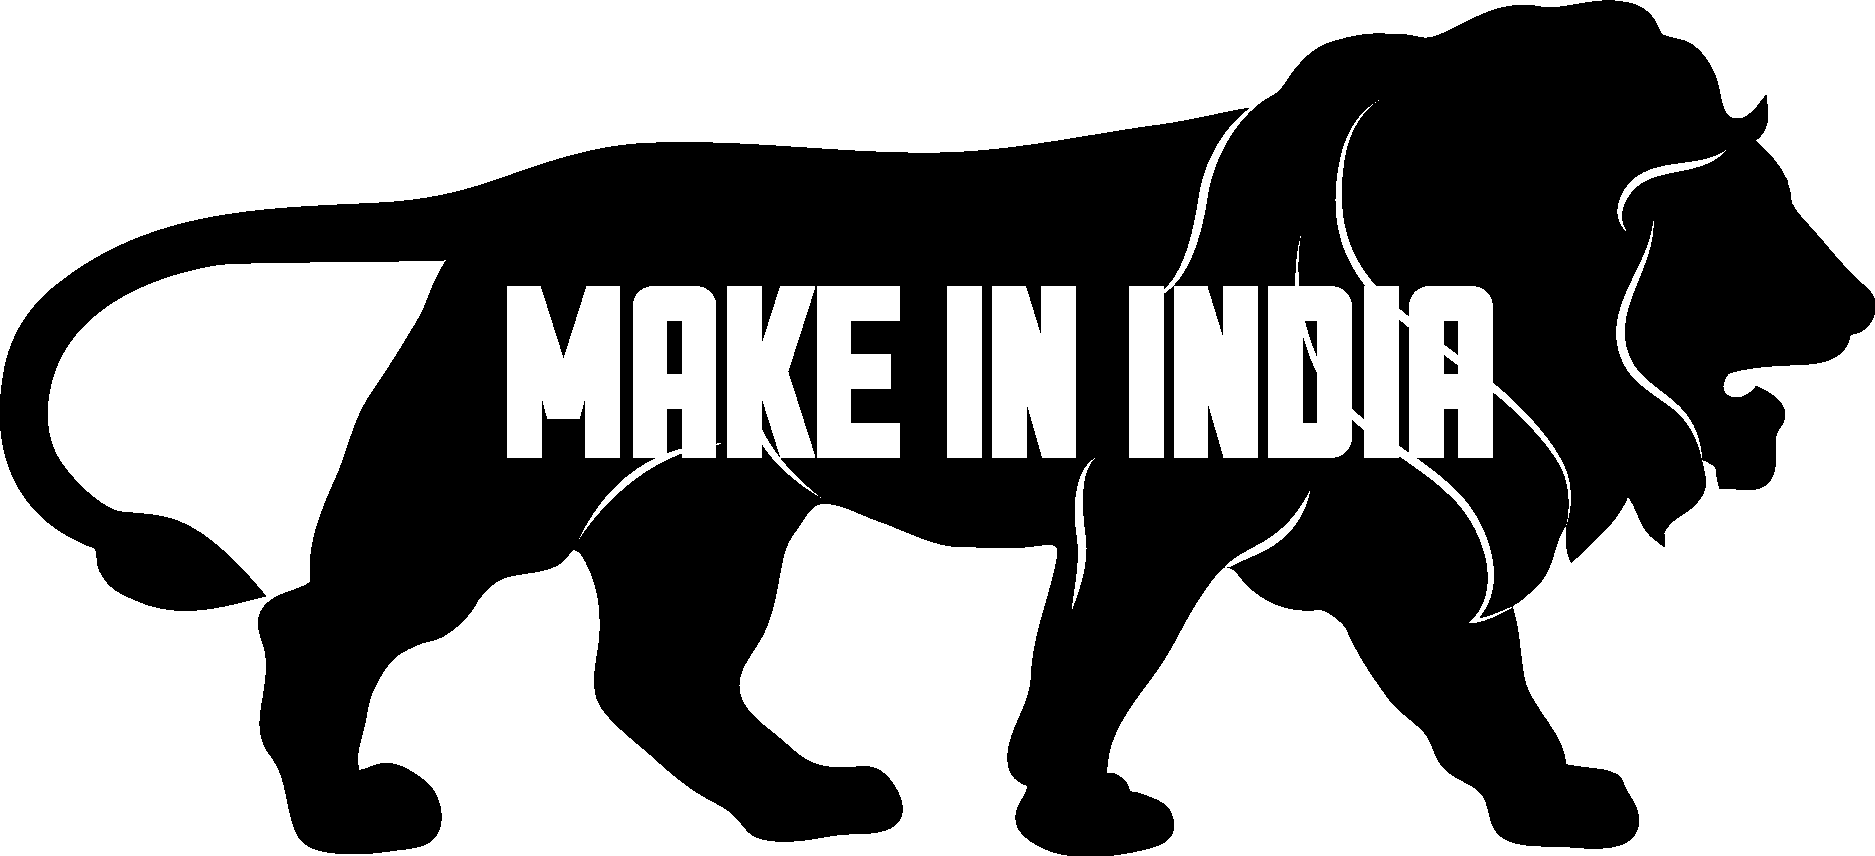 Make it india steam фото 67